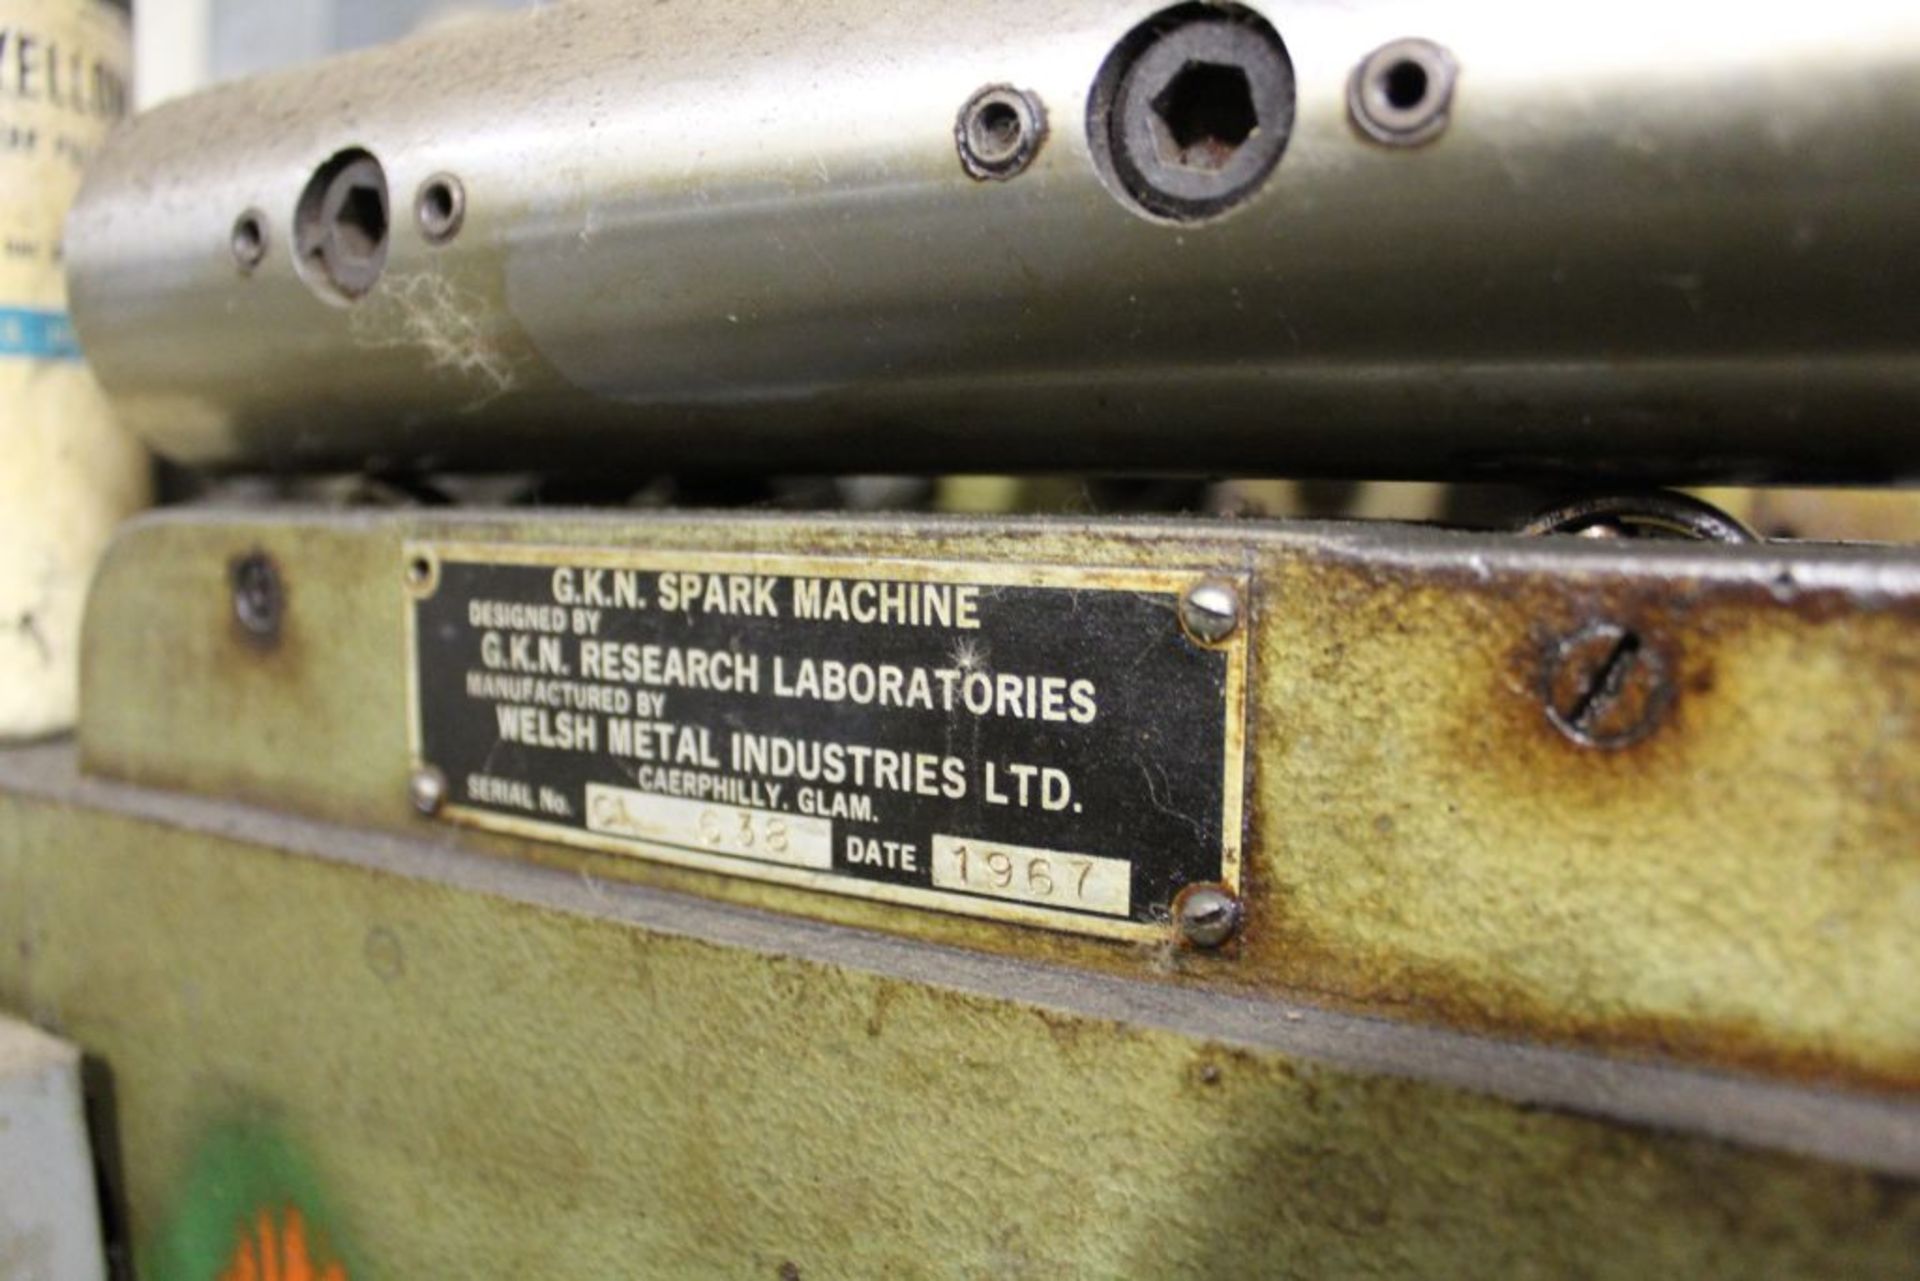 1967 Landis sinker EDM spark machine, sn 638. - Image 2 of 2